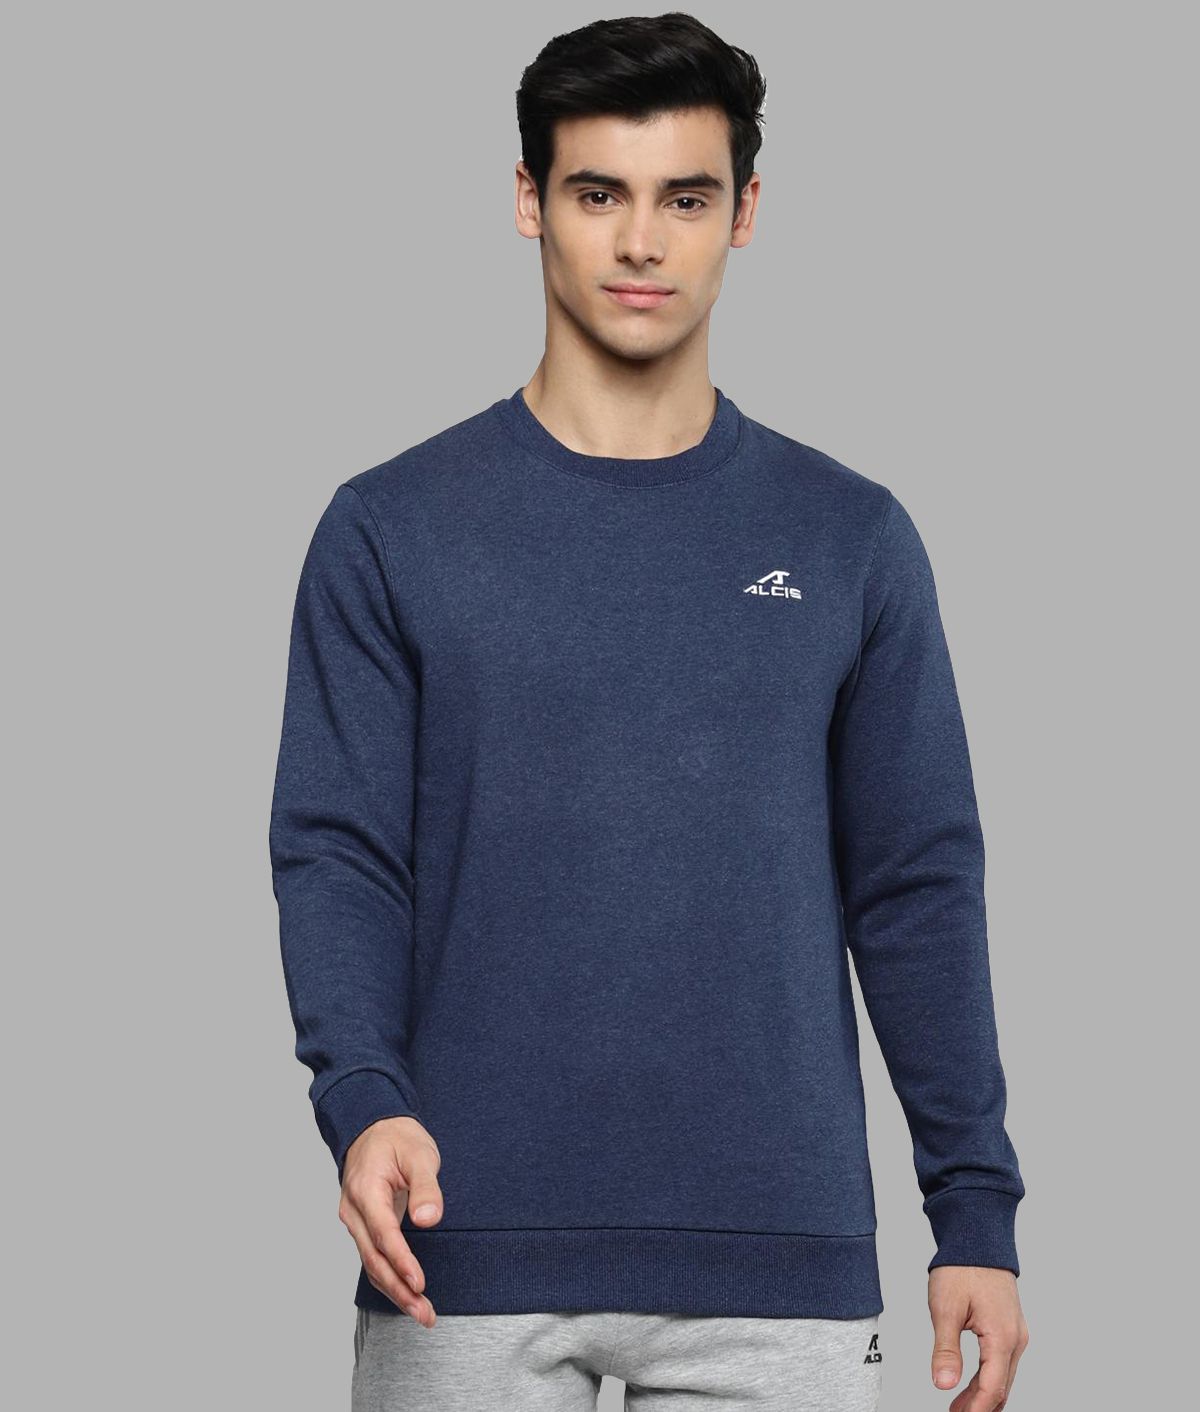     			Alcis -  Navy Blue Cotton Men's Running Sweatshirt ( Pack of 1 )